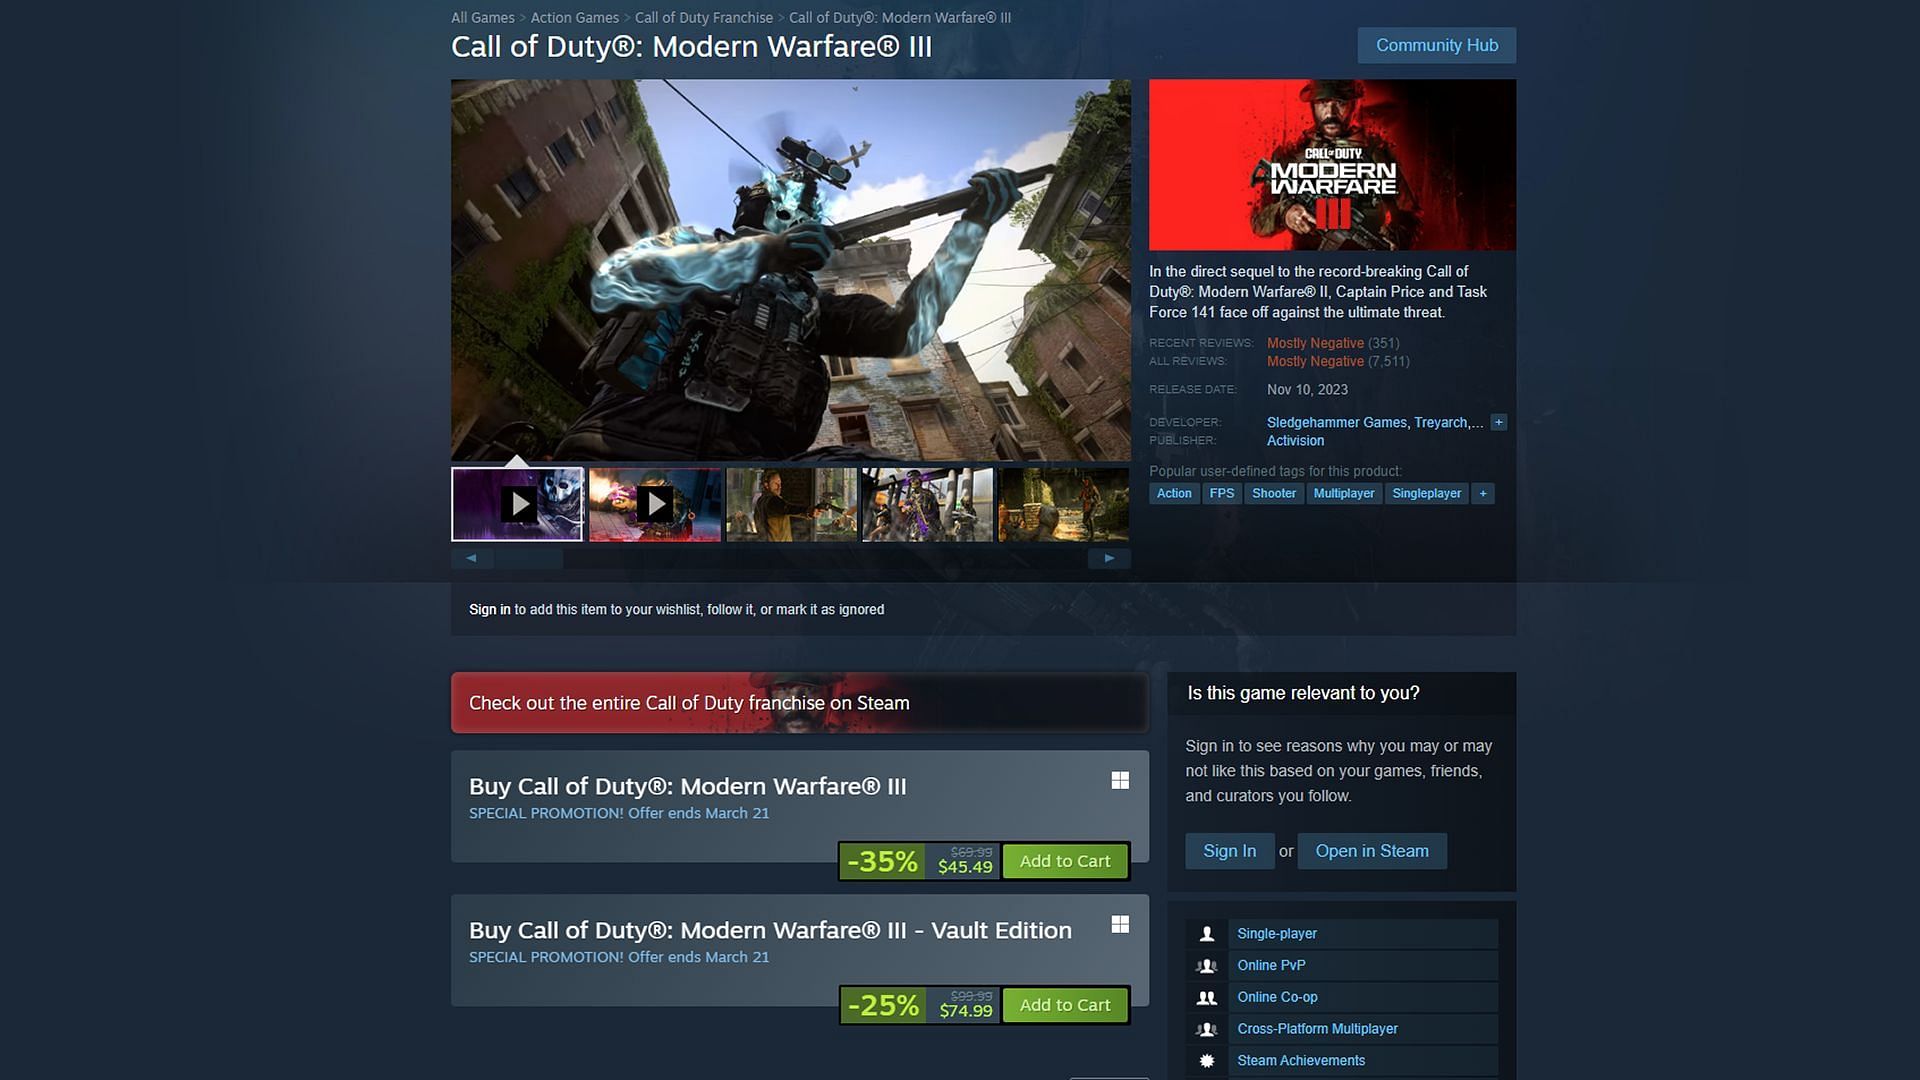 Modern Warfare 3 discount details on Steam explored (Images via Valve/Activision)